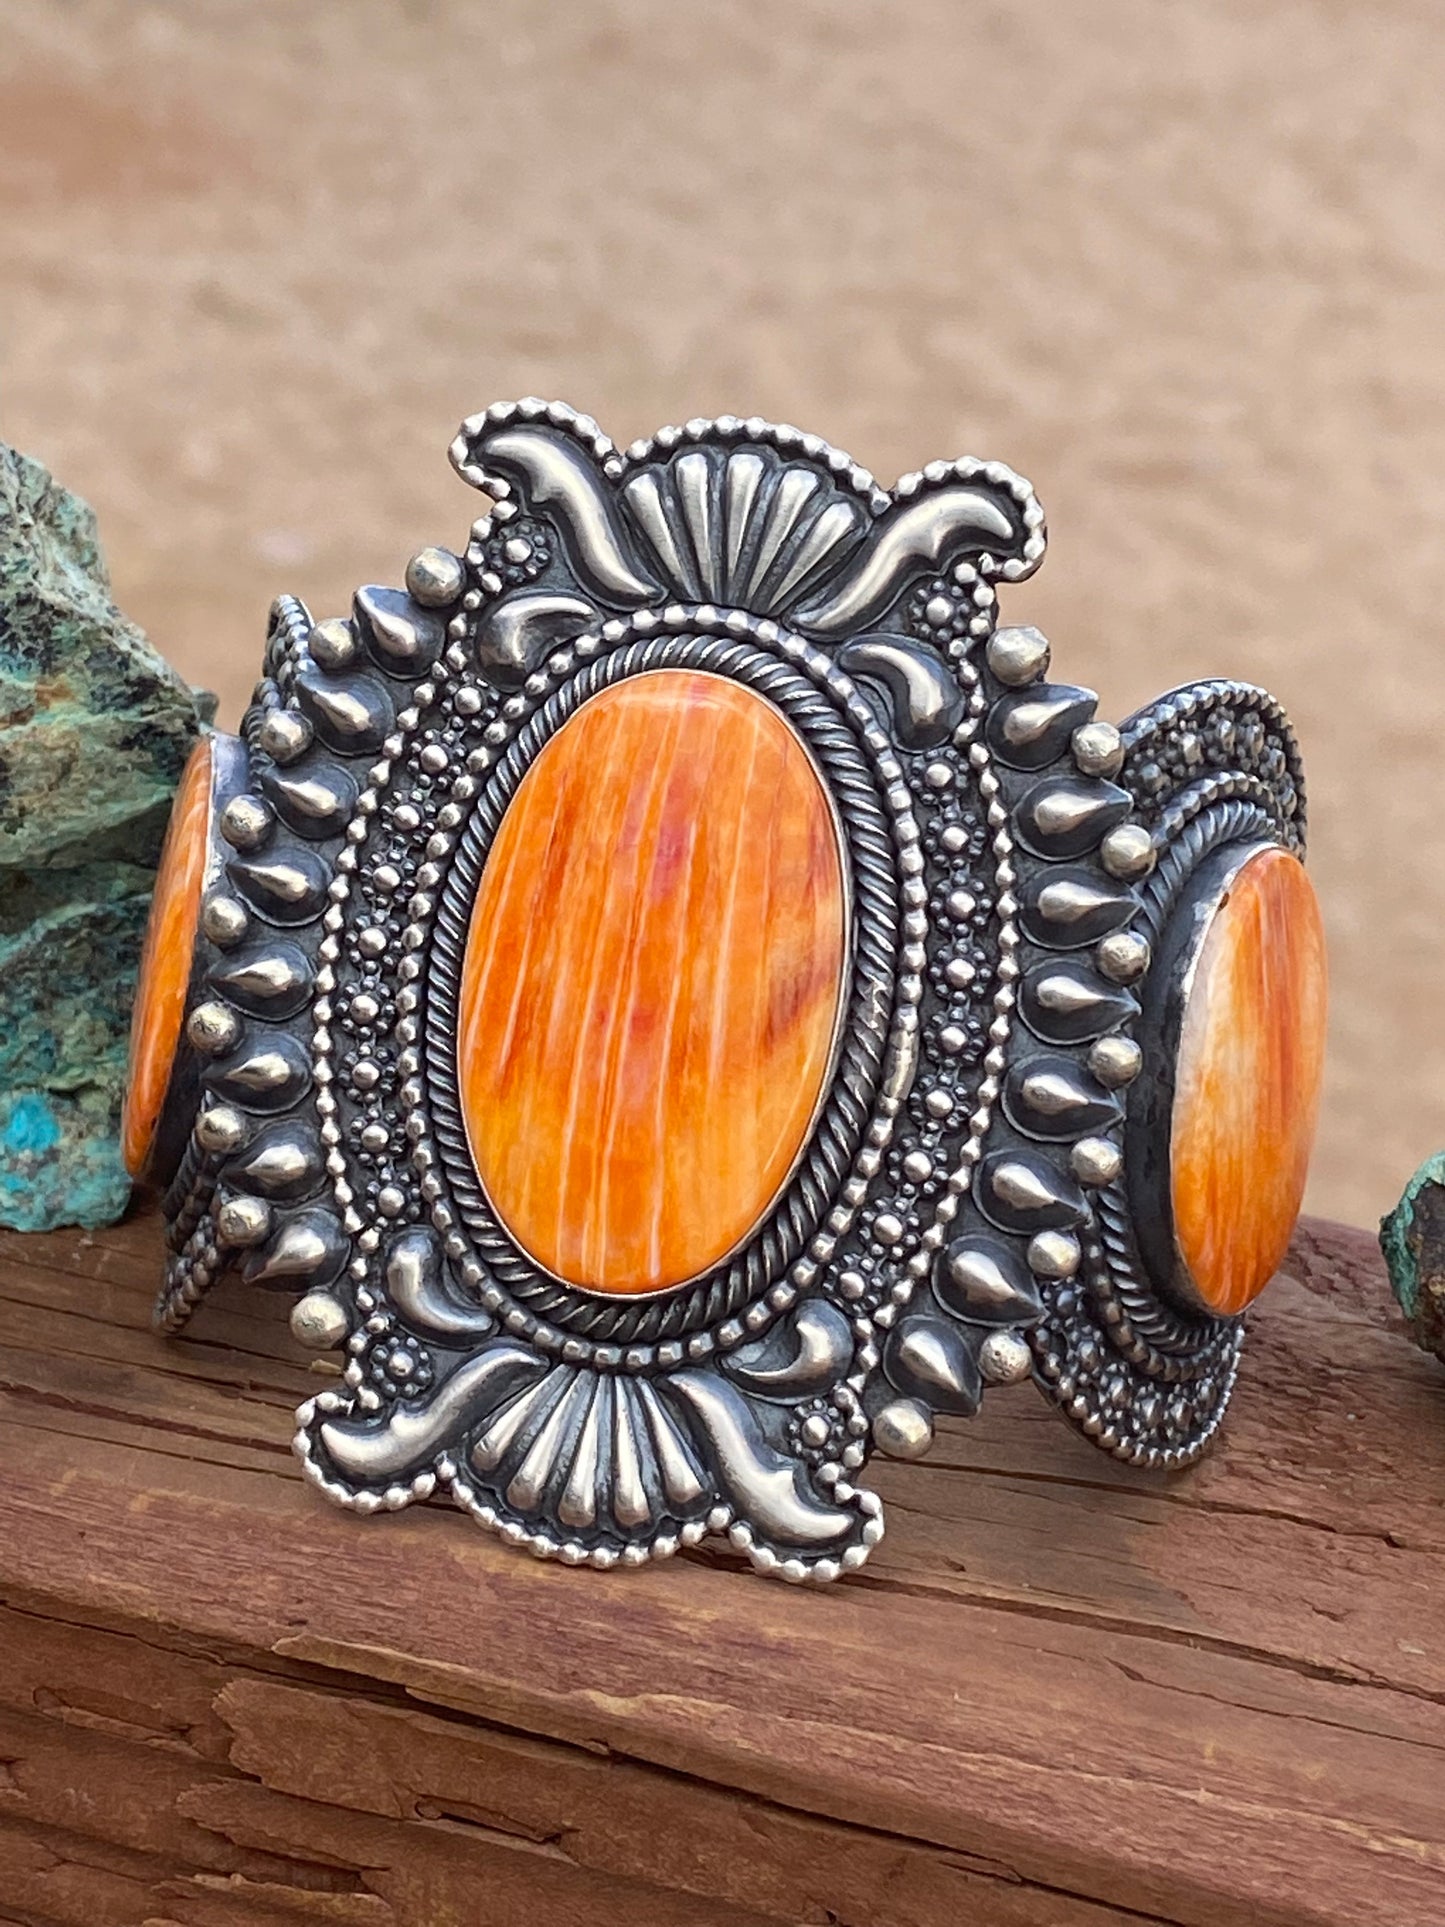 Beautiful Navajo Orange Spiny & Sterling Silver Cuff Bracelet Signed